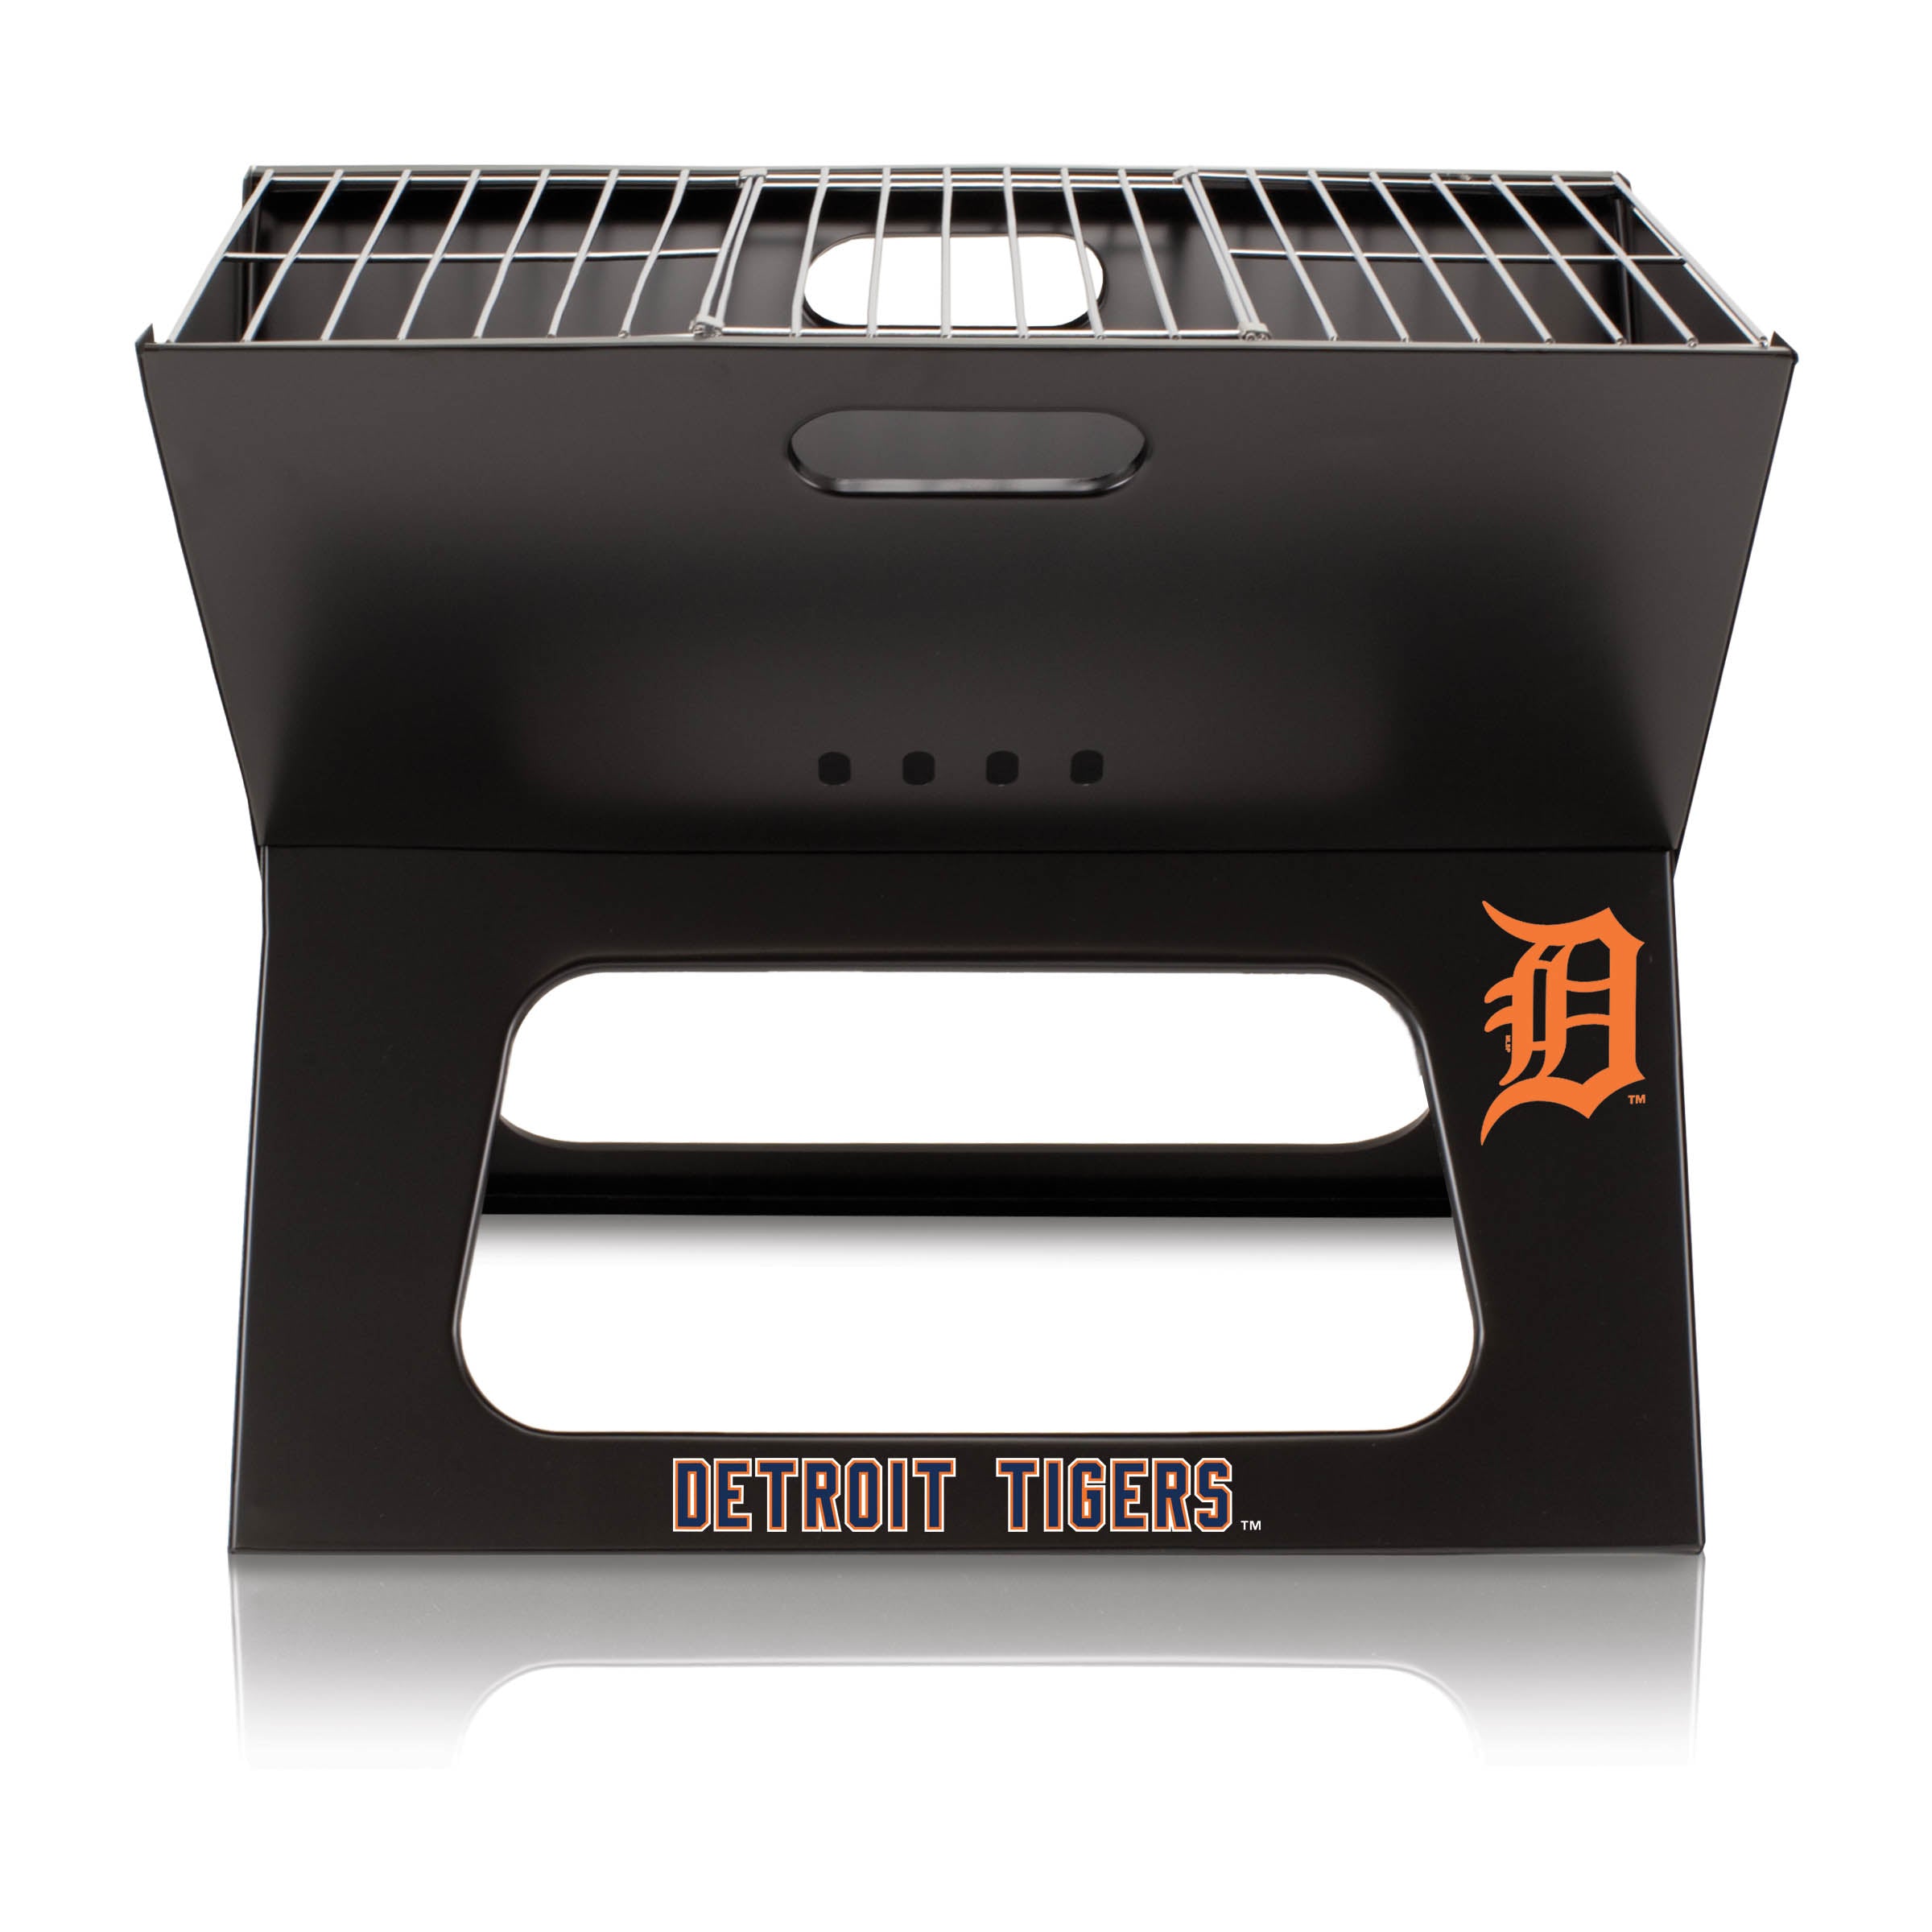 Detroit Tigers - X-Grill Portable Charcoal BBQ Grill